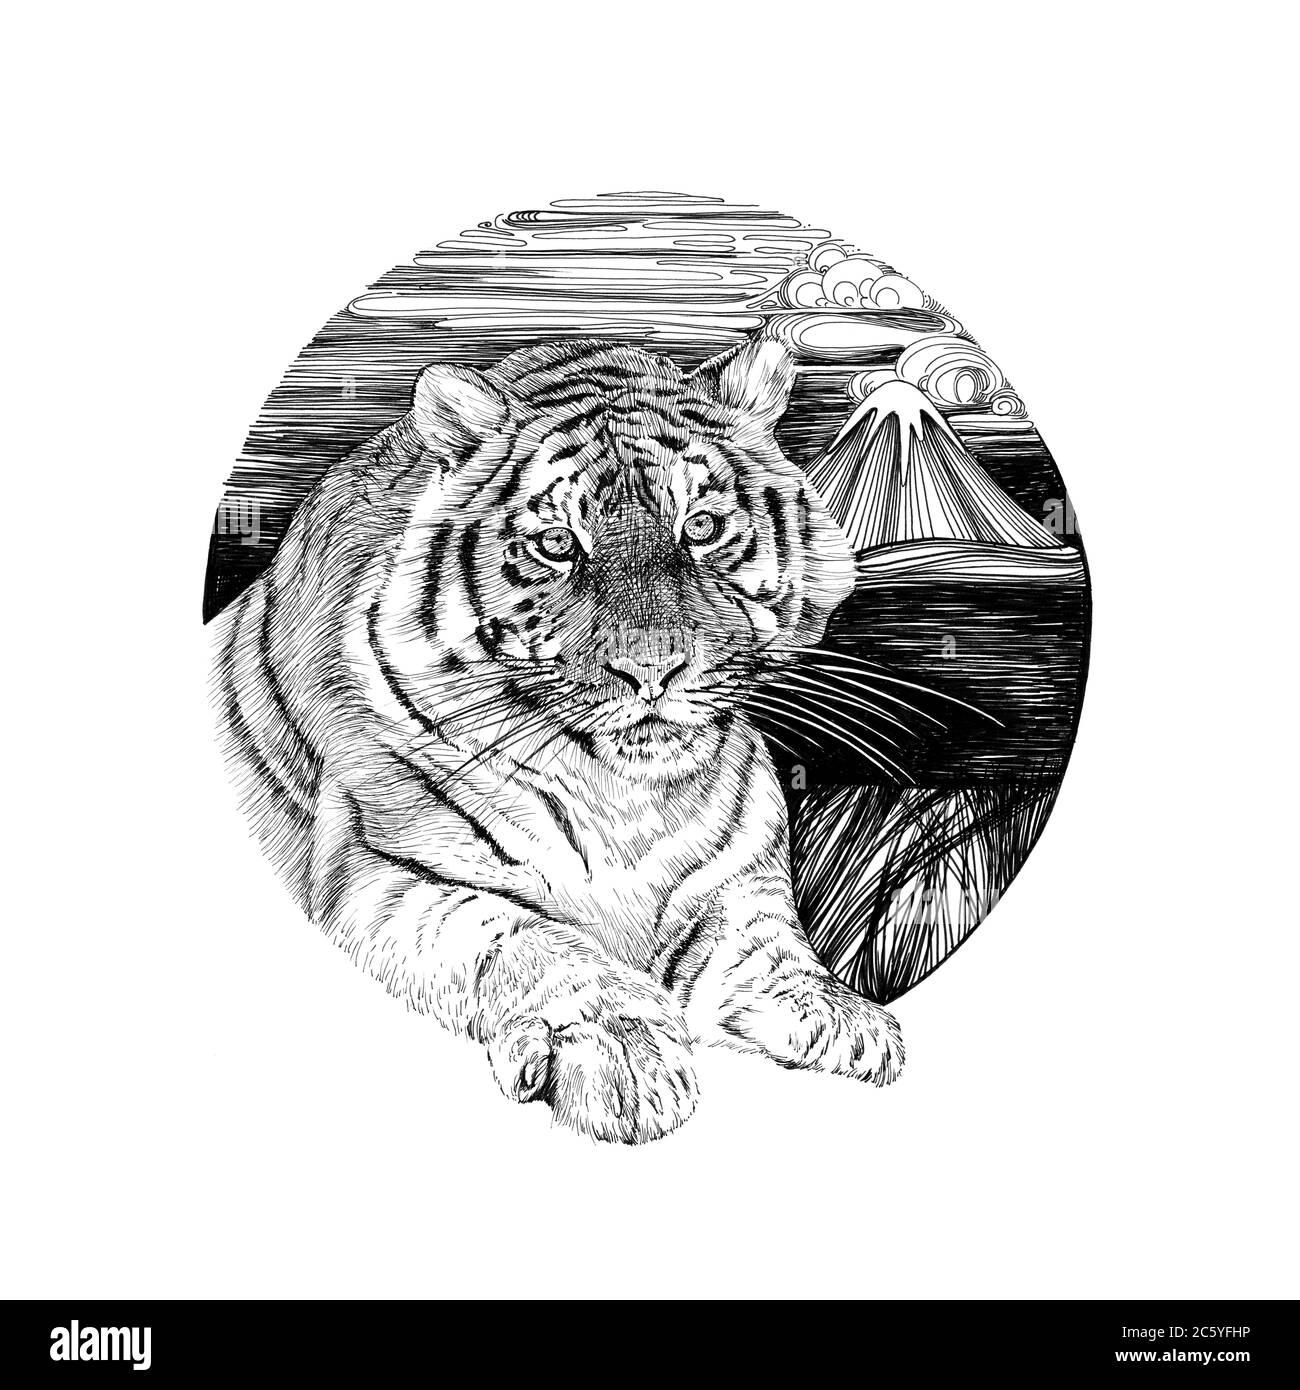 https://c8.alamy.com/comp/2C5YFHP/hand-drawn-tiger-sketch-graphics-monochrome-illustration-on-white-background-originals-no-tracing-2C5YFHP.jpg